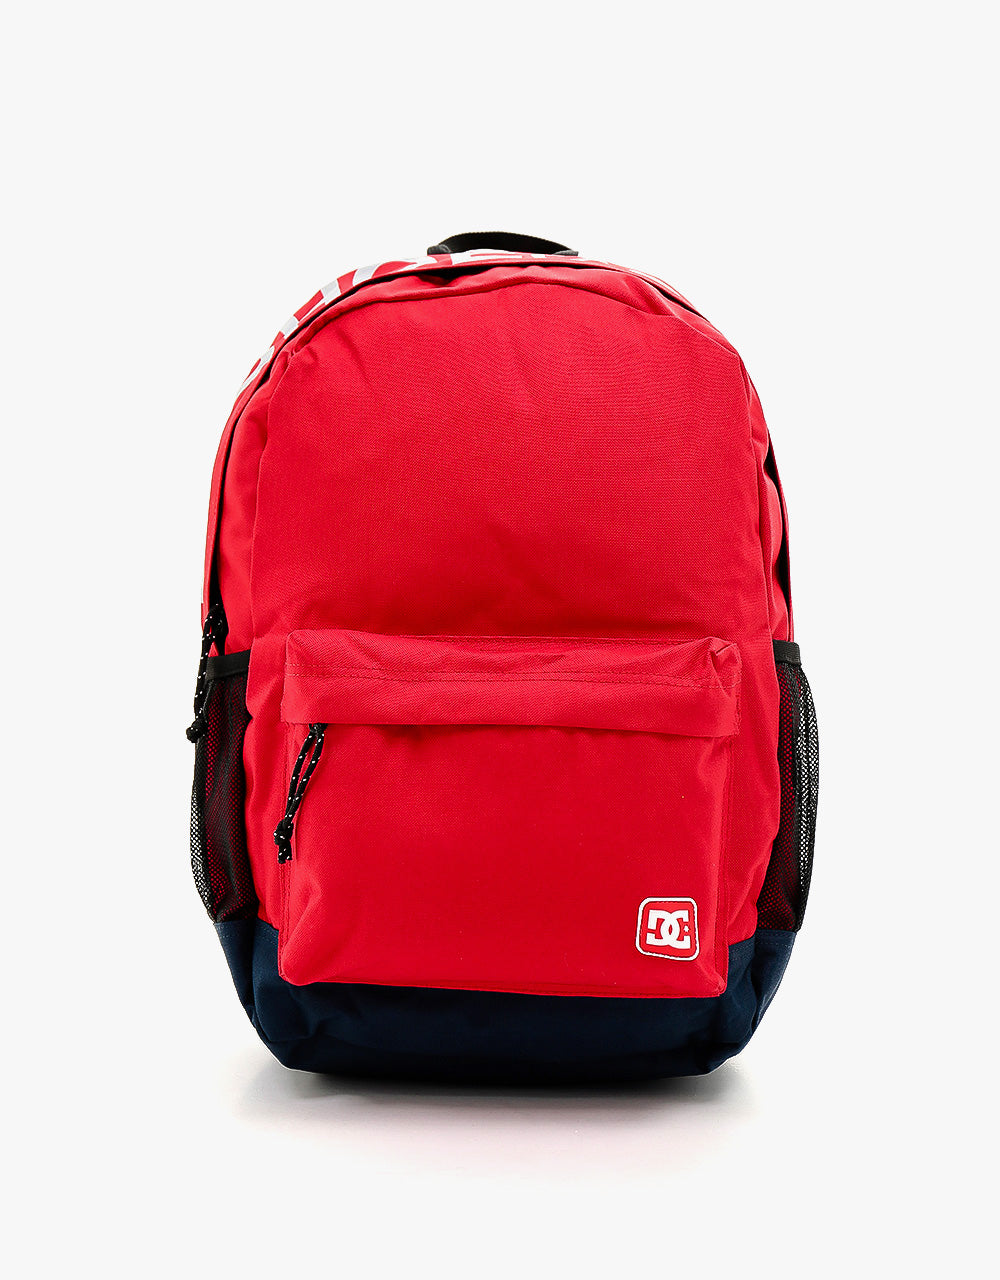 DC Backsider Backpack - Racing Red